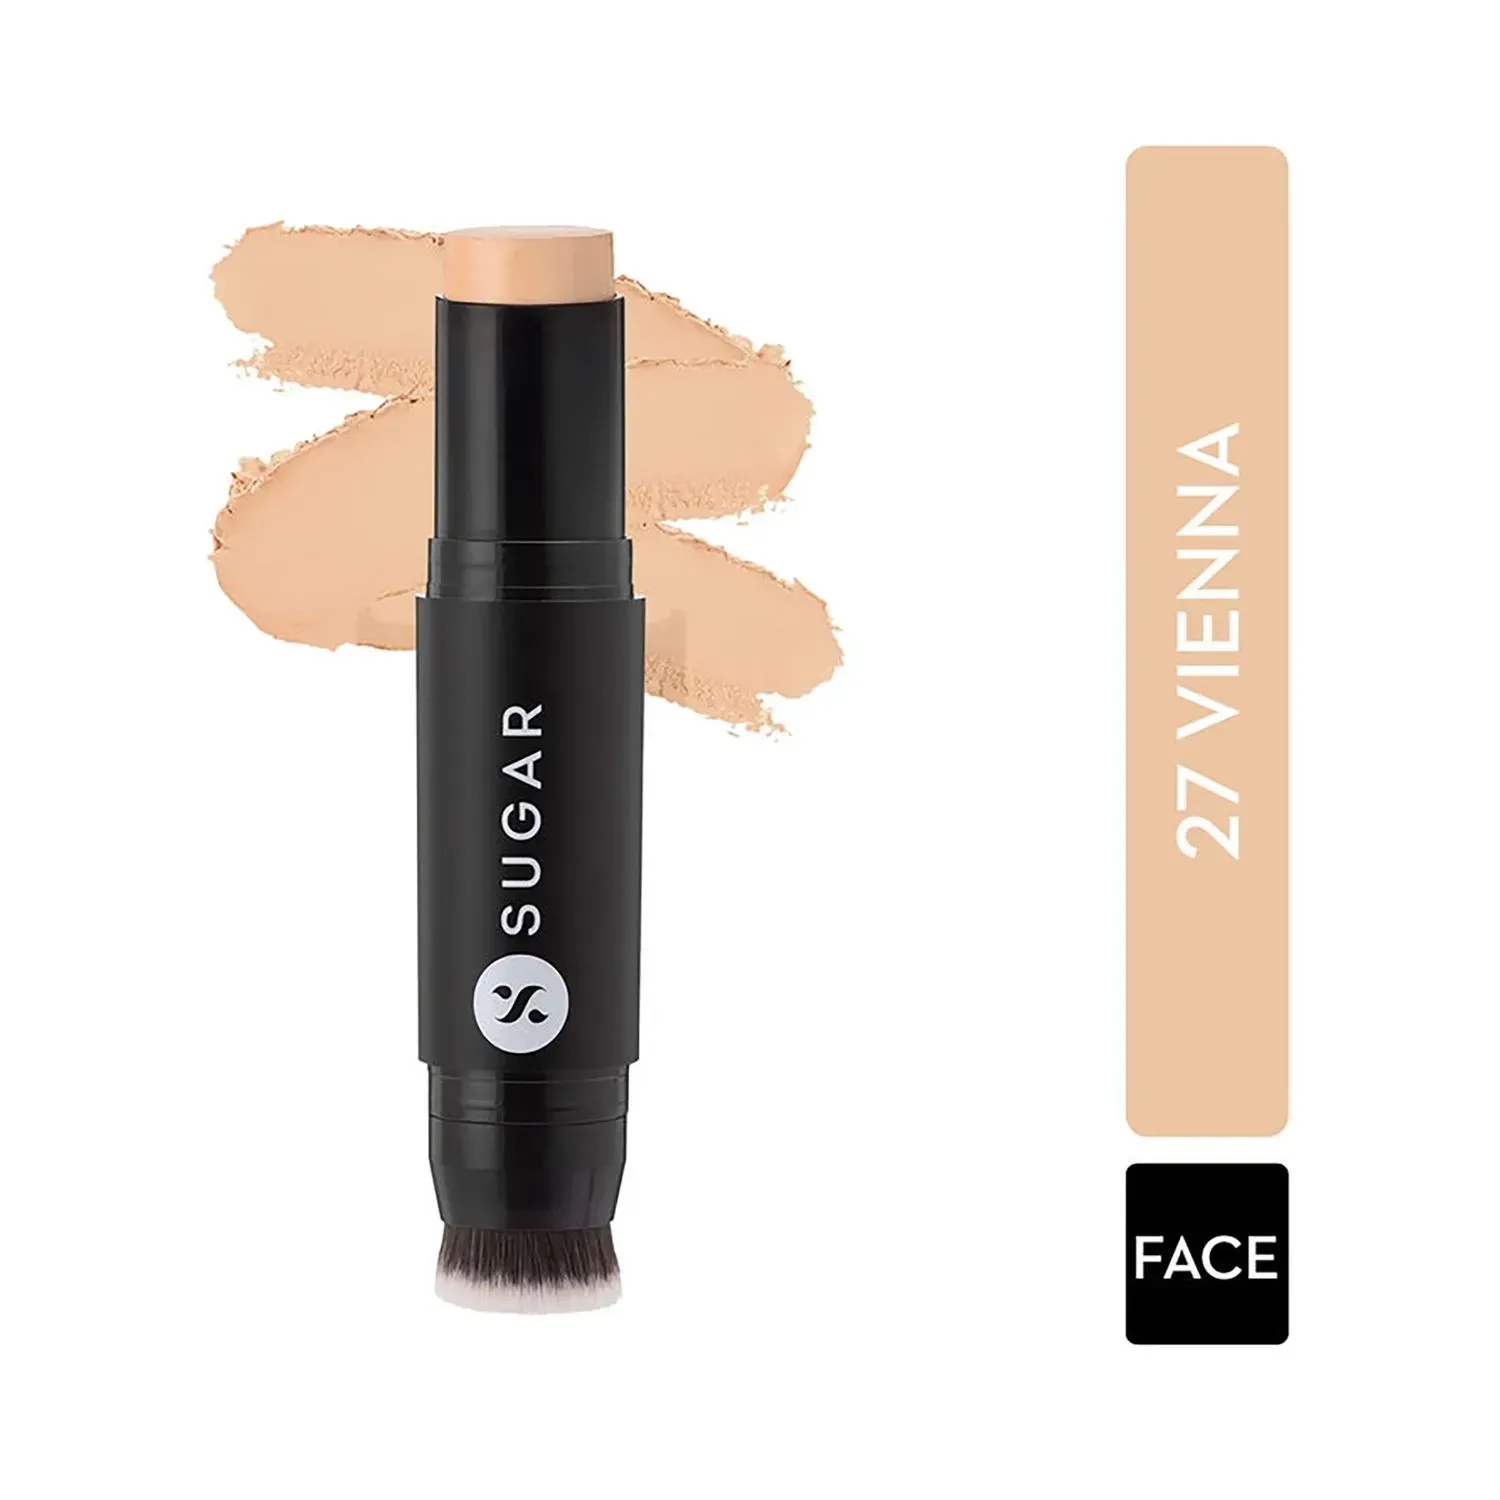 SUGAR Cosmetics | SUGAR Cosmetics Ace Of Face Foundation Stick With Inbuilt Brush - 27 Vienna (Light Medium, Warm Undertone) (12g)